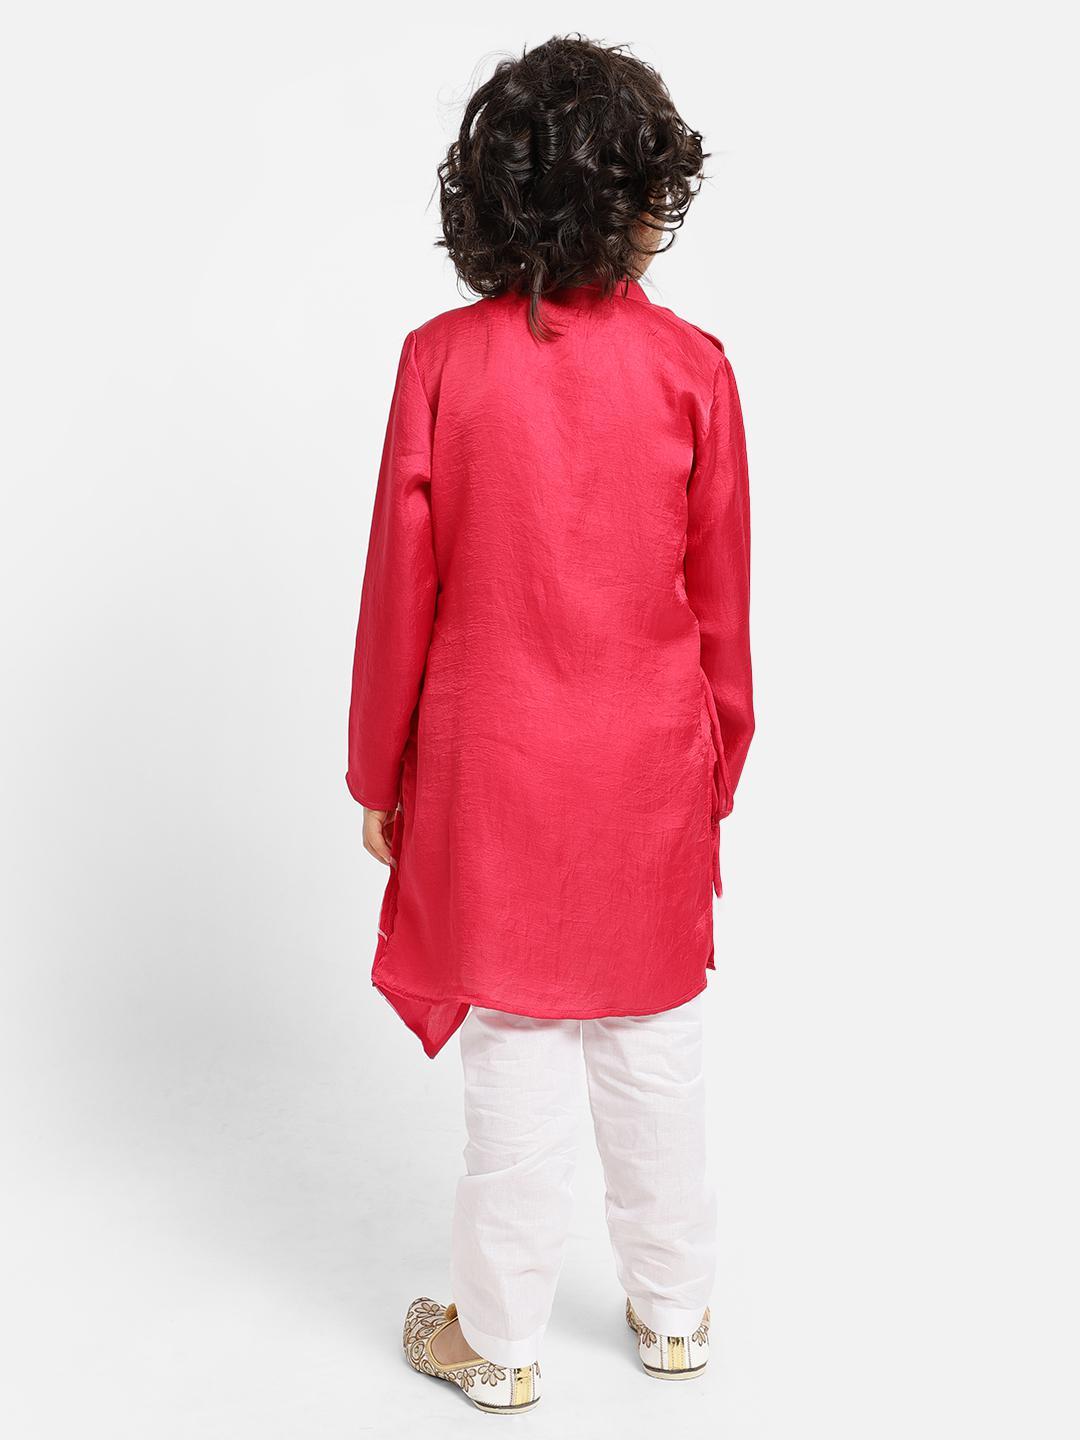 pink-full-sleeve-kurta-with-white-pajama-set-10520069PK, Indian Kids Clothing, Satin Boy Kurta Pajama Set